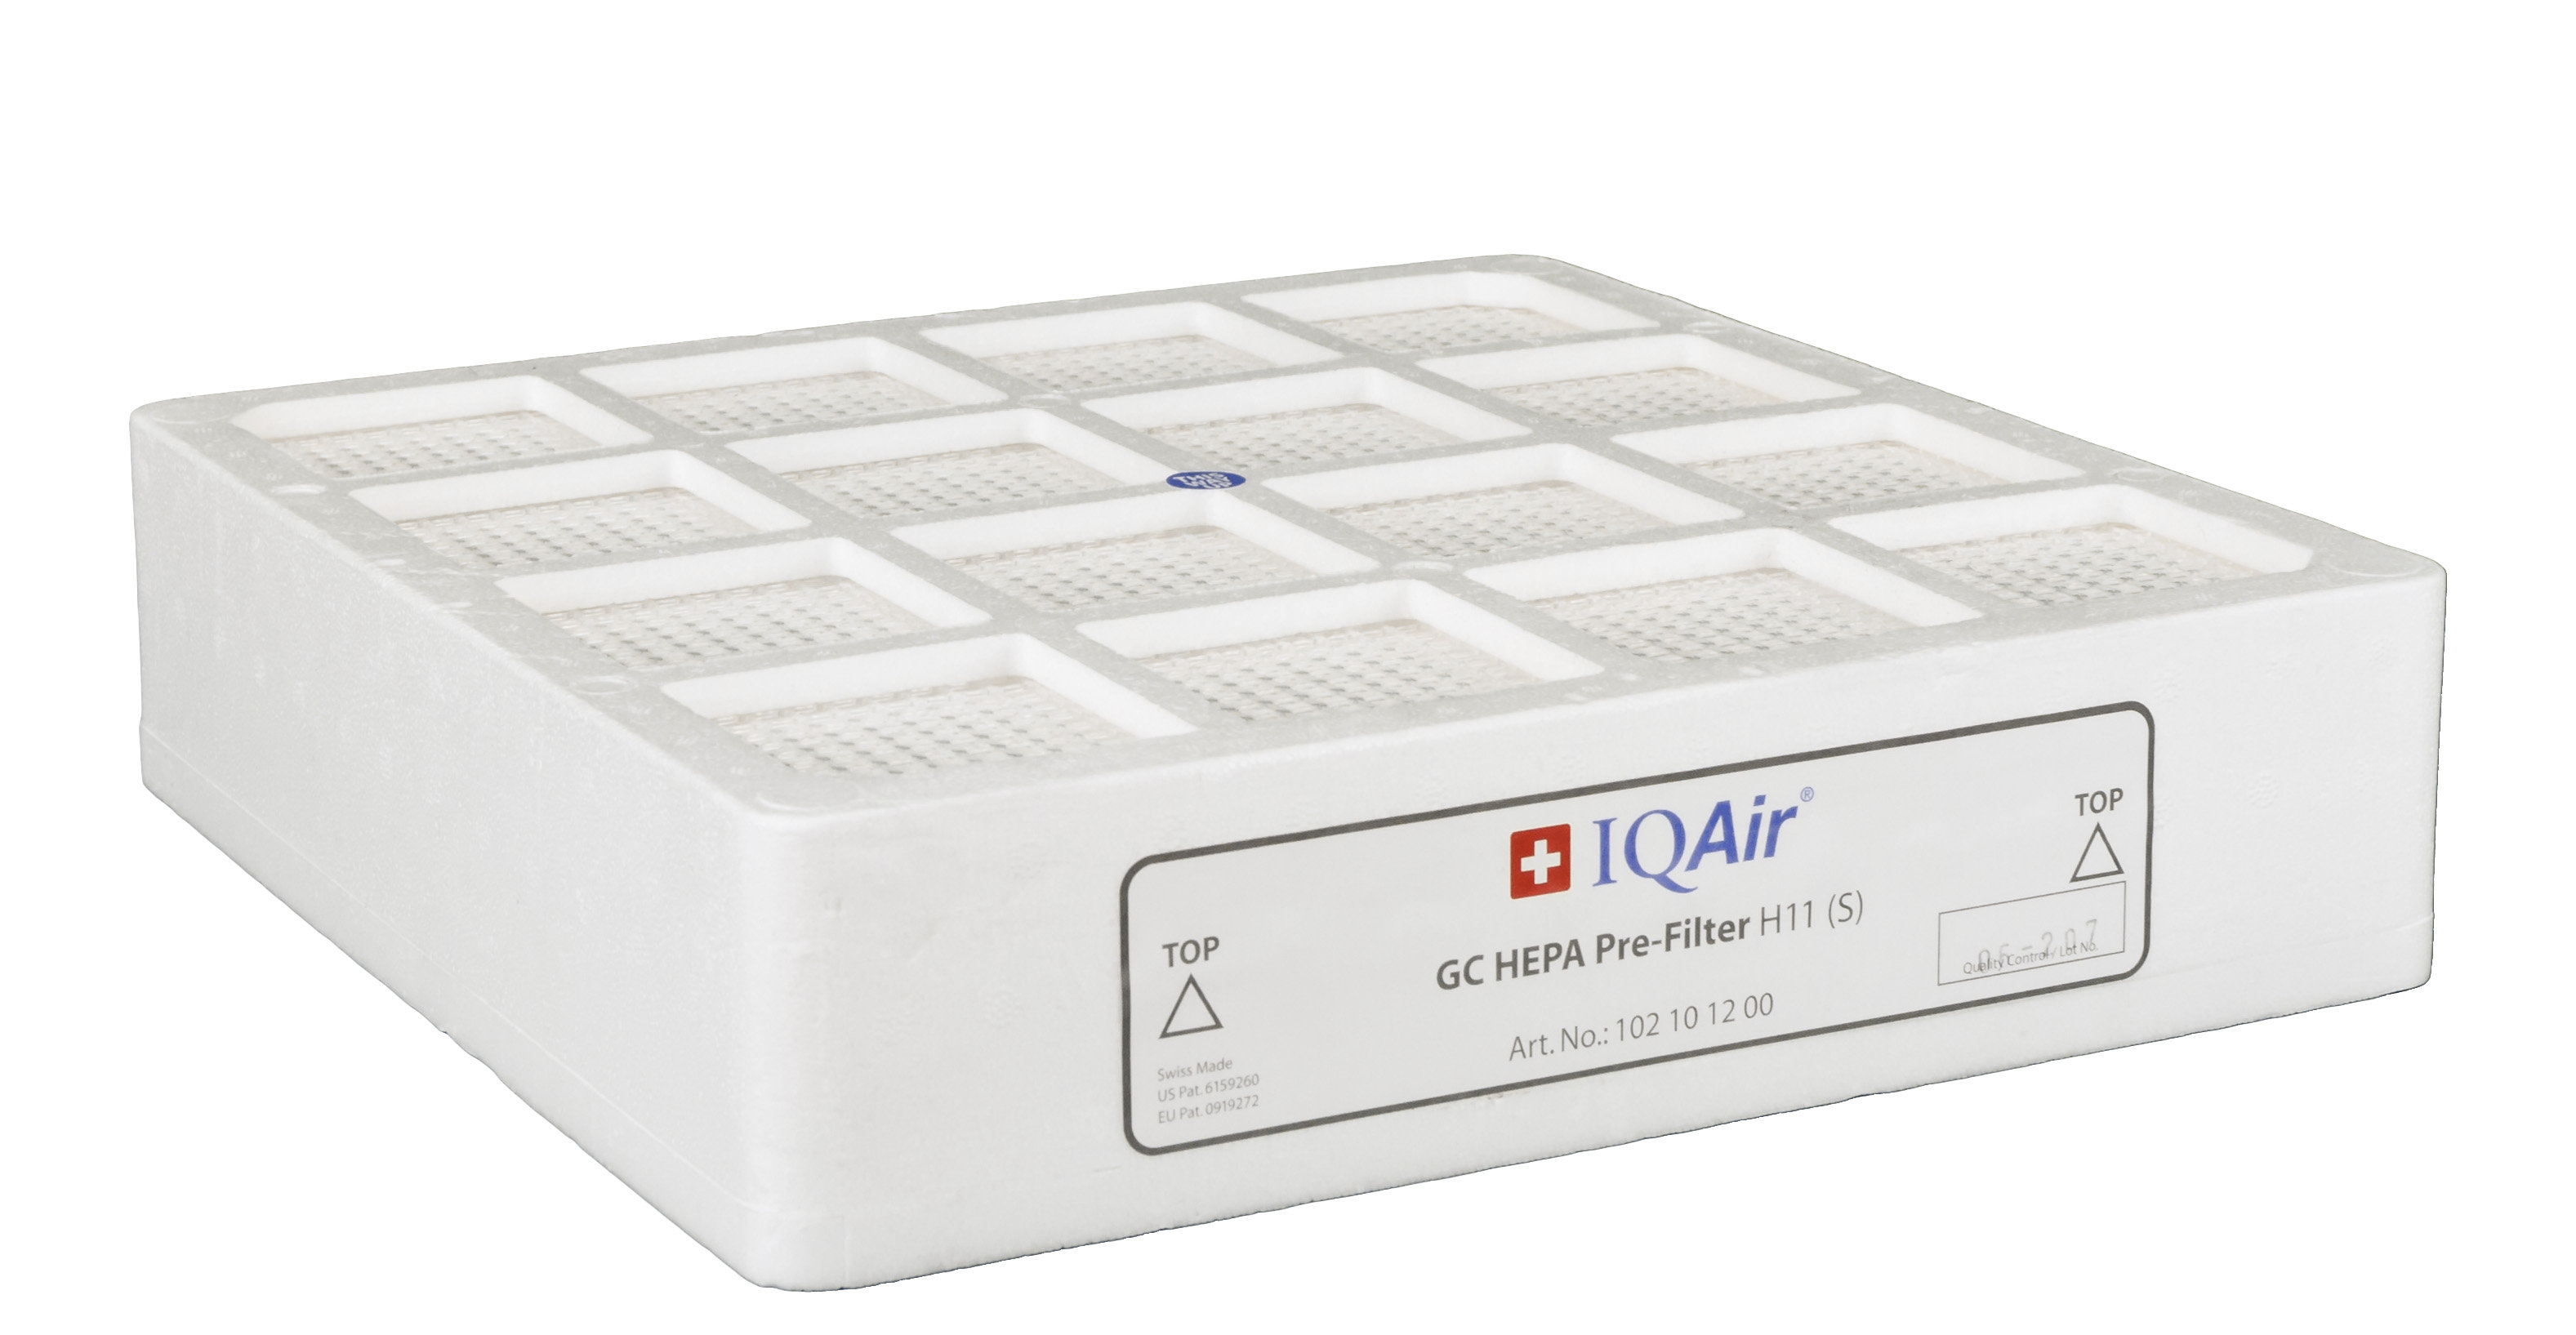 2 Pack HyperHEPA H11 Pre-Filter fits IQAir GC MultiGas Air Purifier 102 10 12 00 